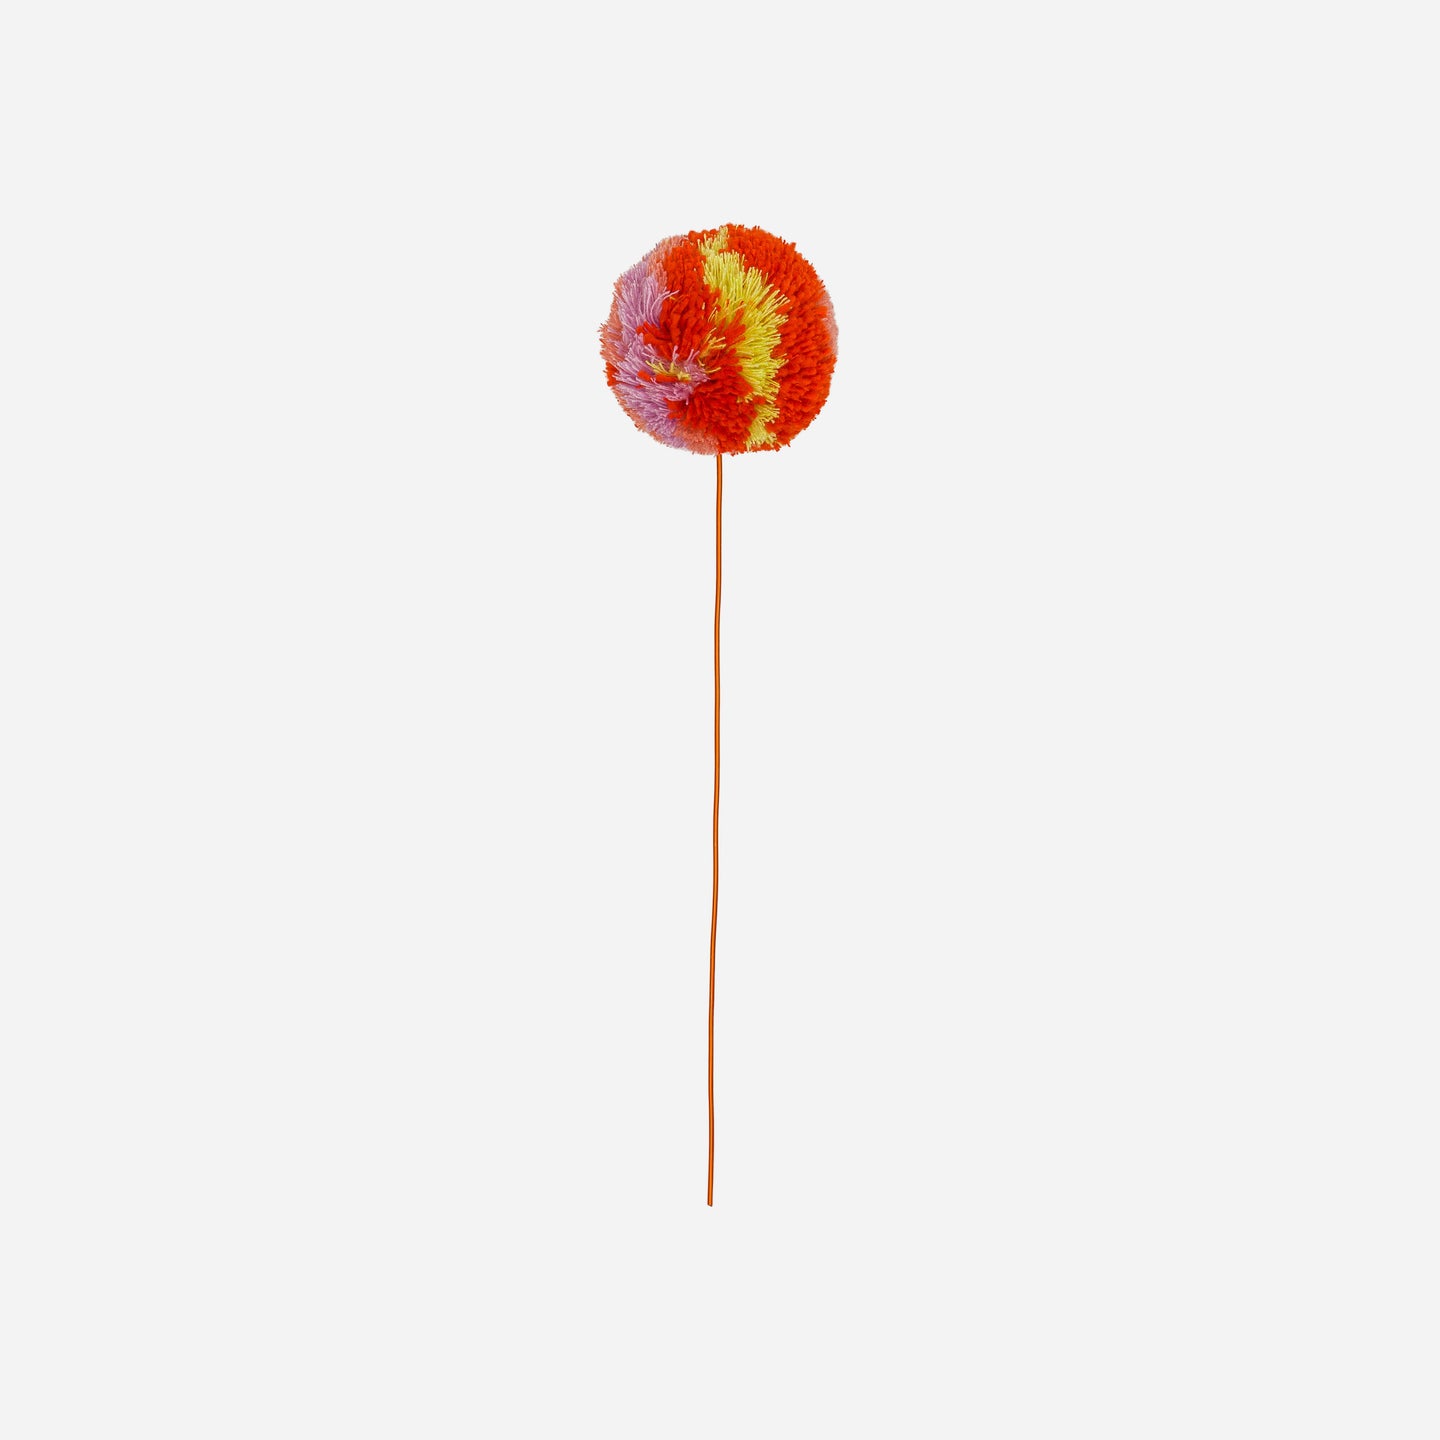 knitted poppy flower in pom pom with a white background